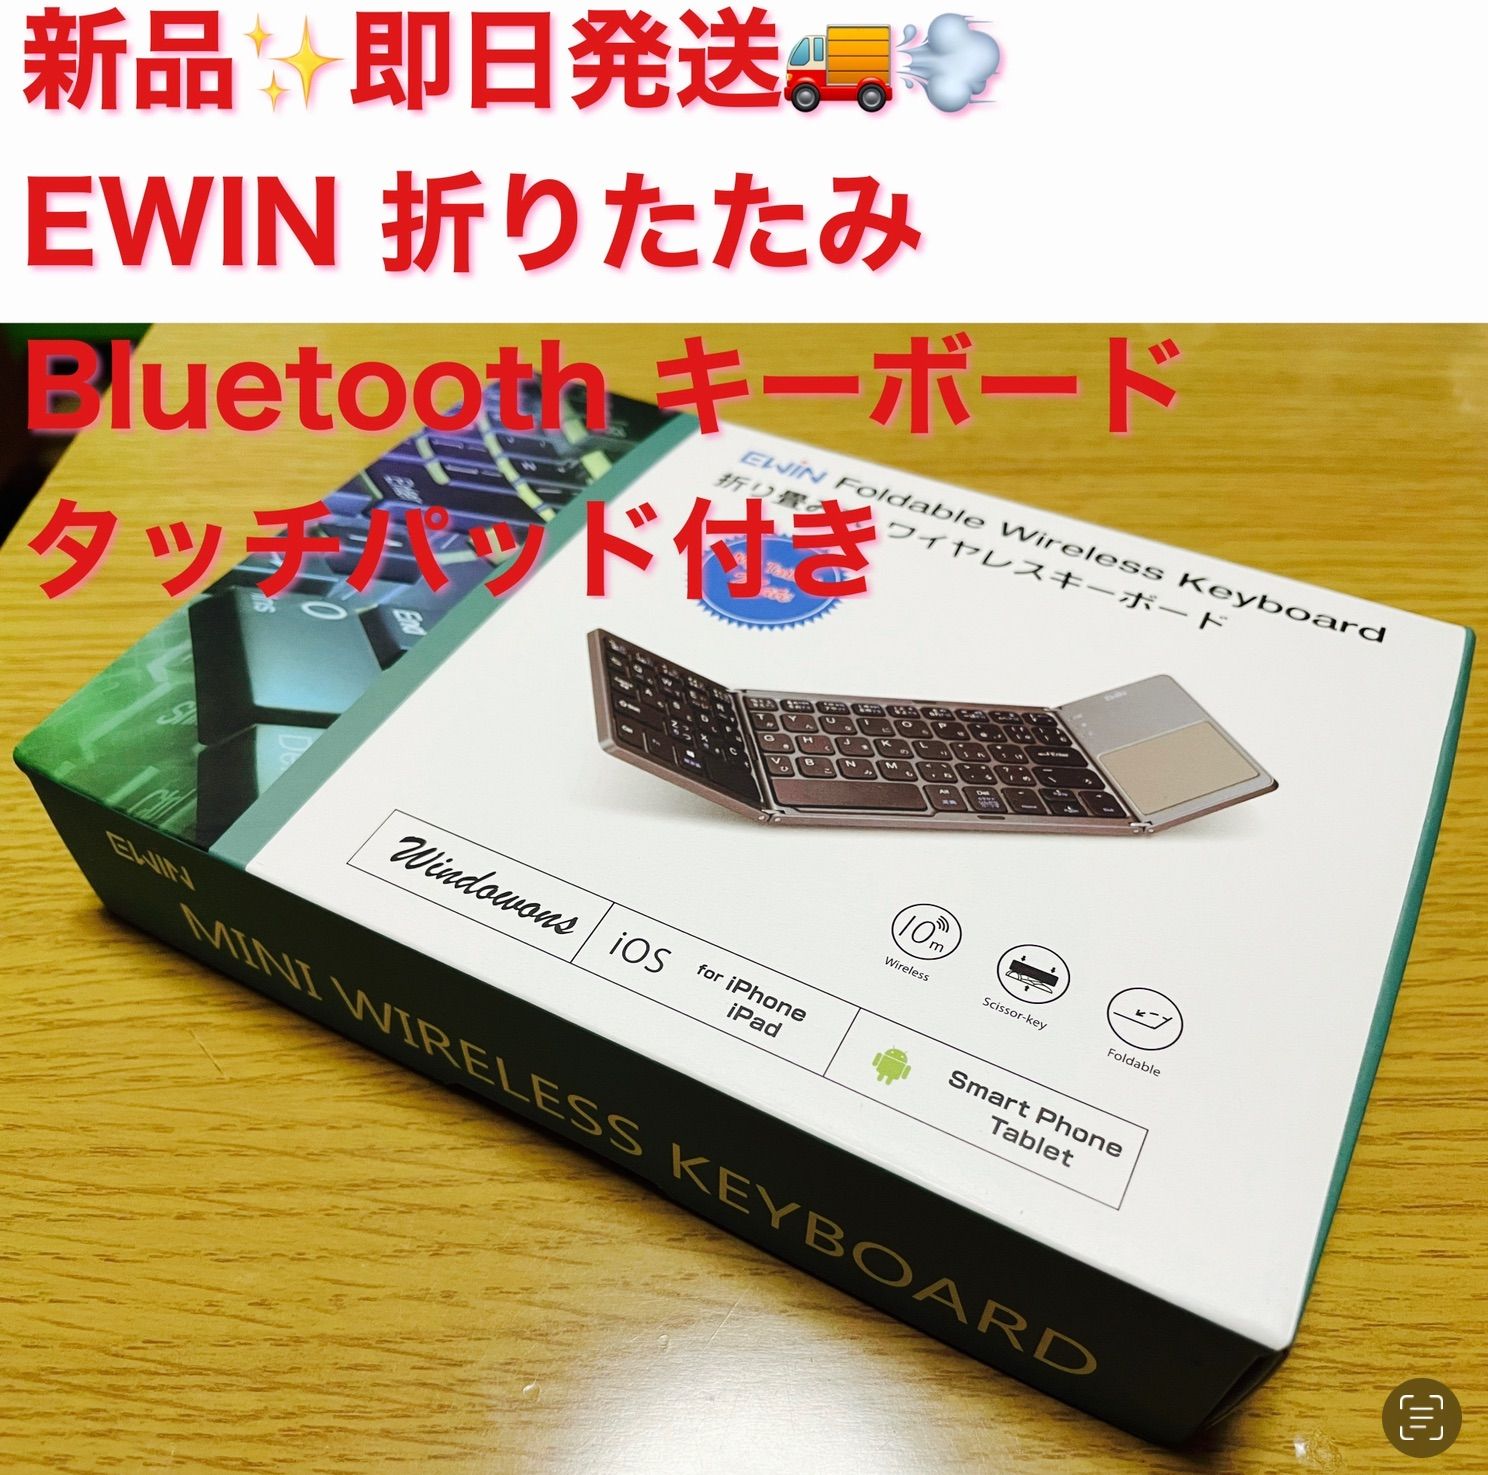 Ewin® タッチパッド搭載 mini Wireless keyboard タブレット | d-edge